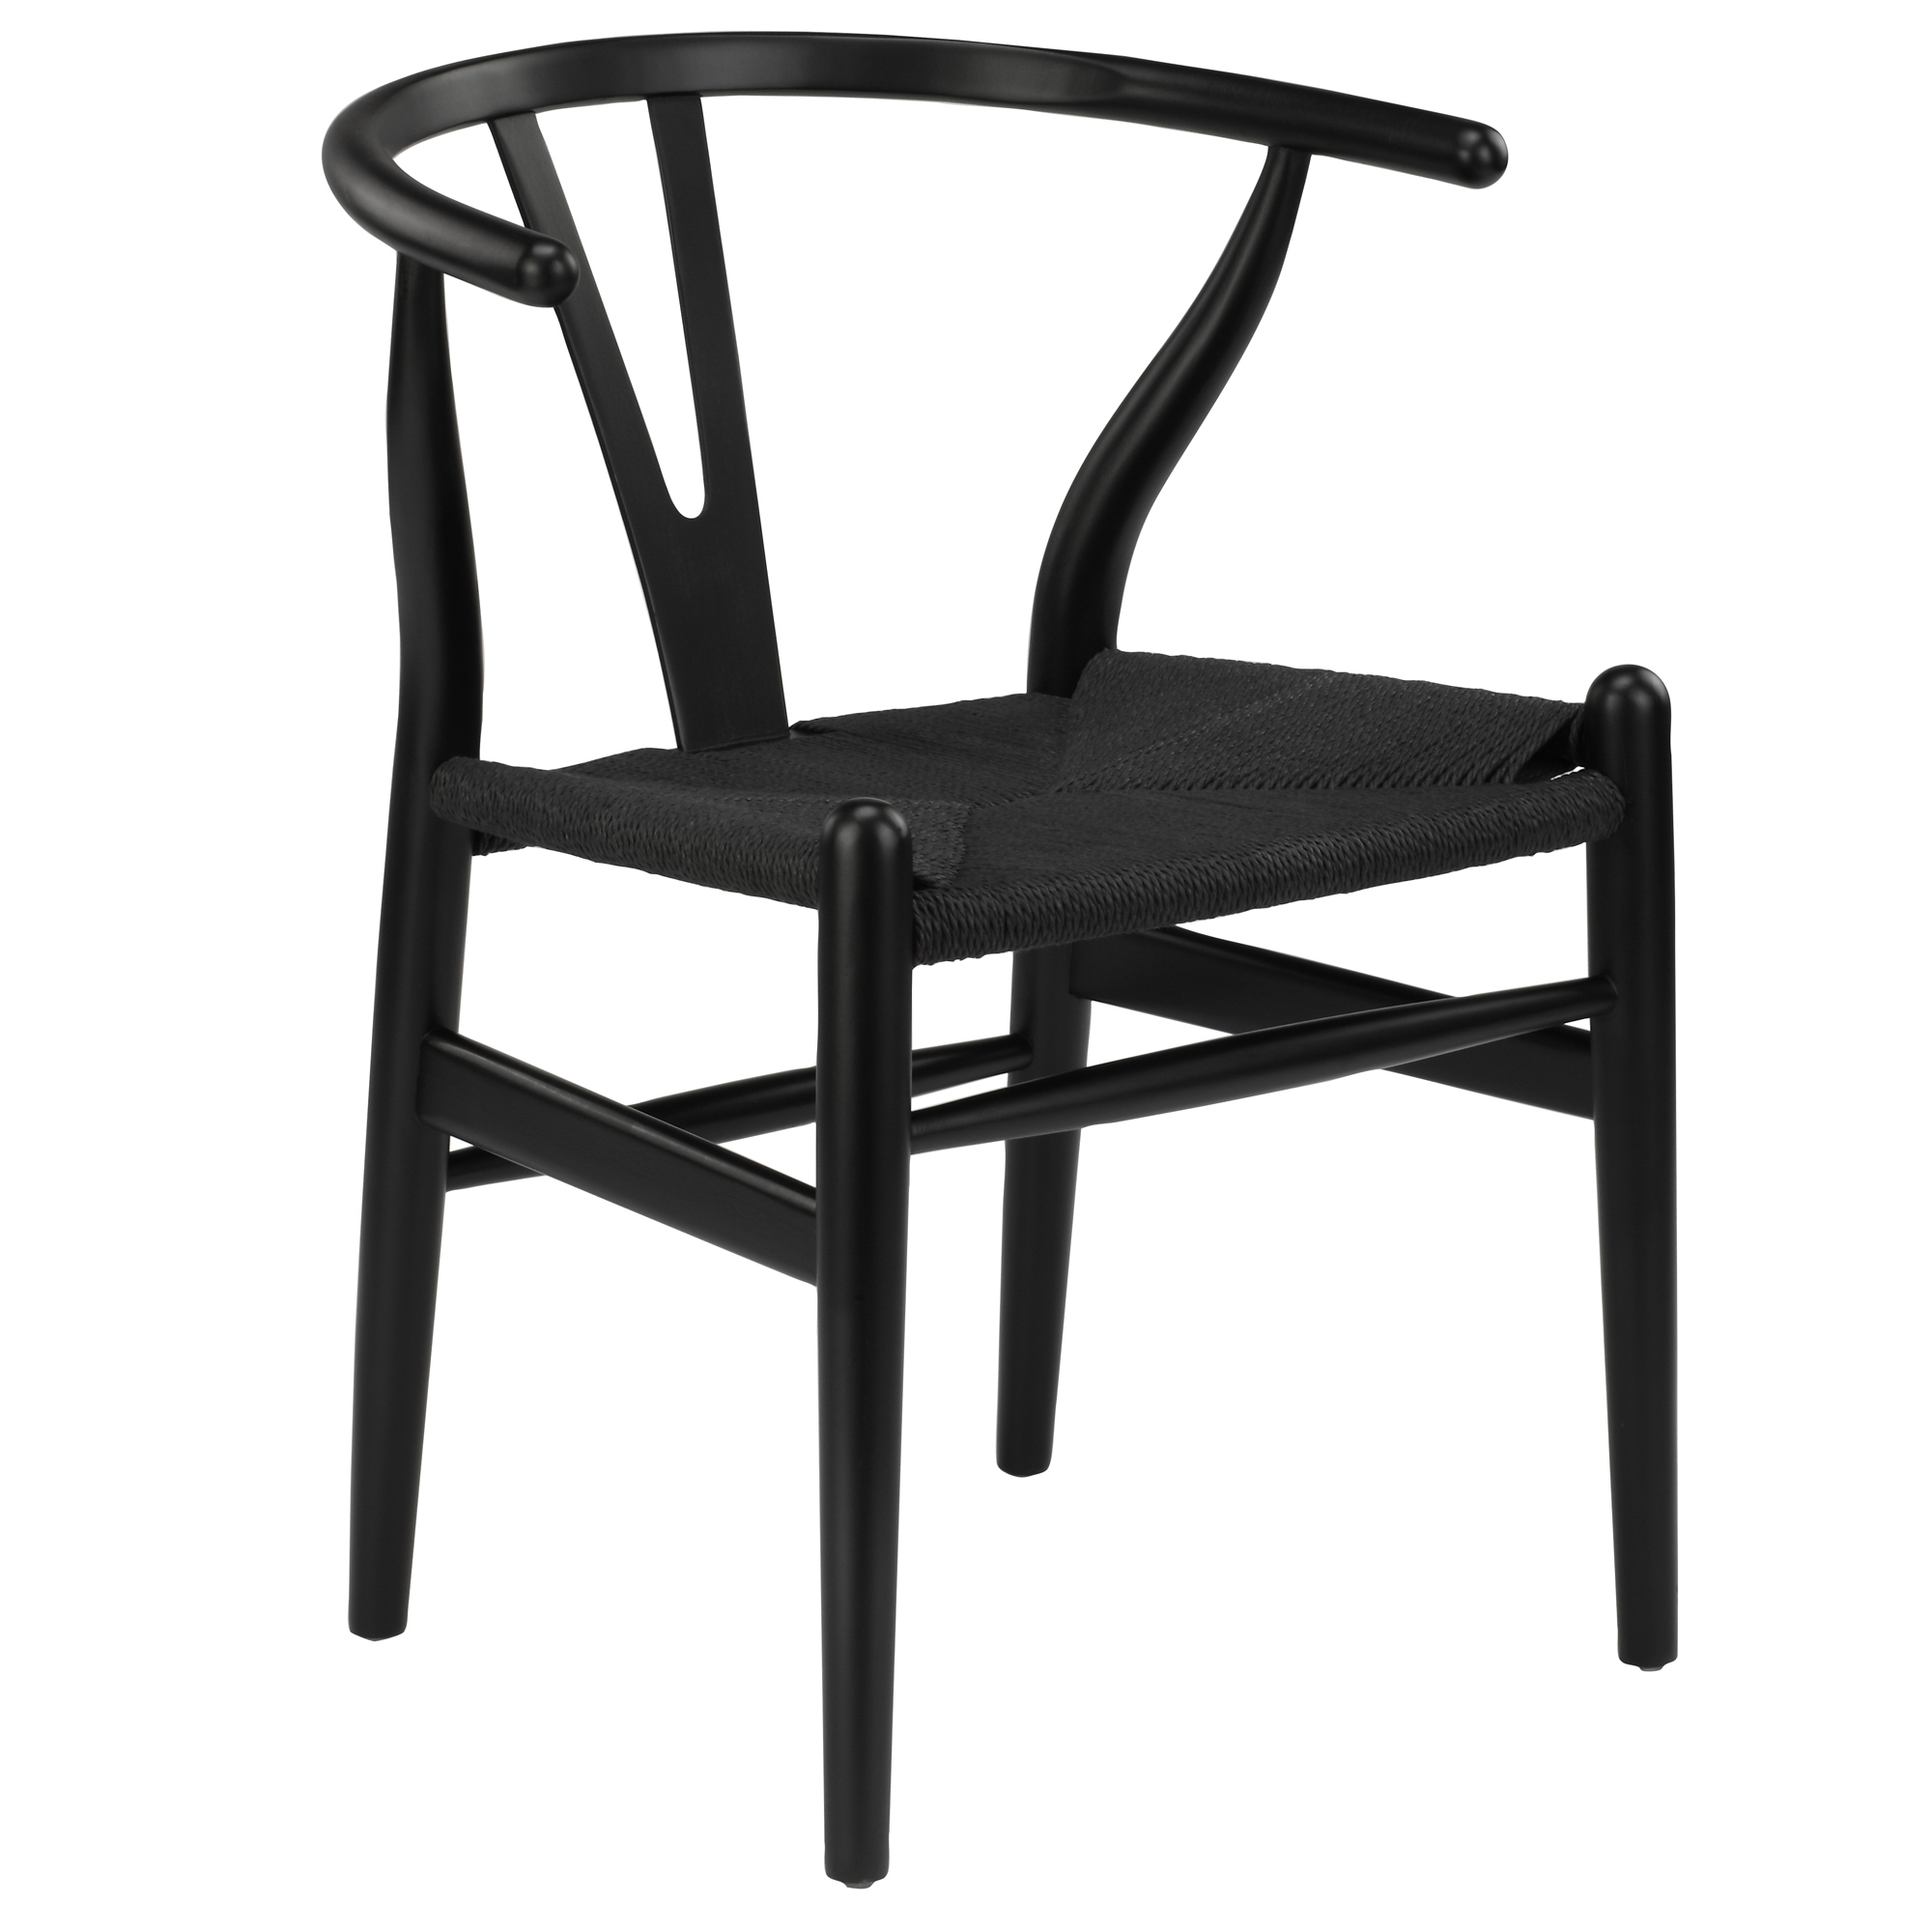 Creatice Wishbone Chair Black Replica for Living room